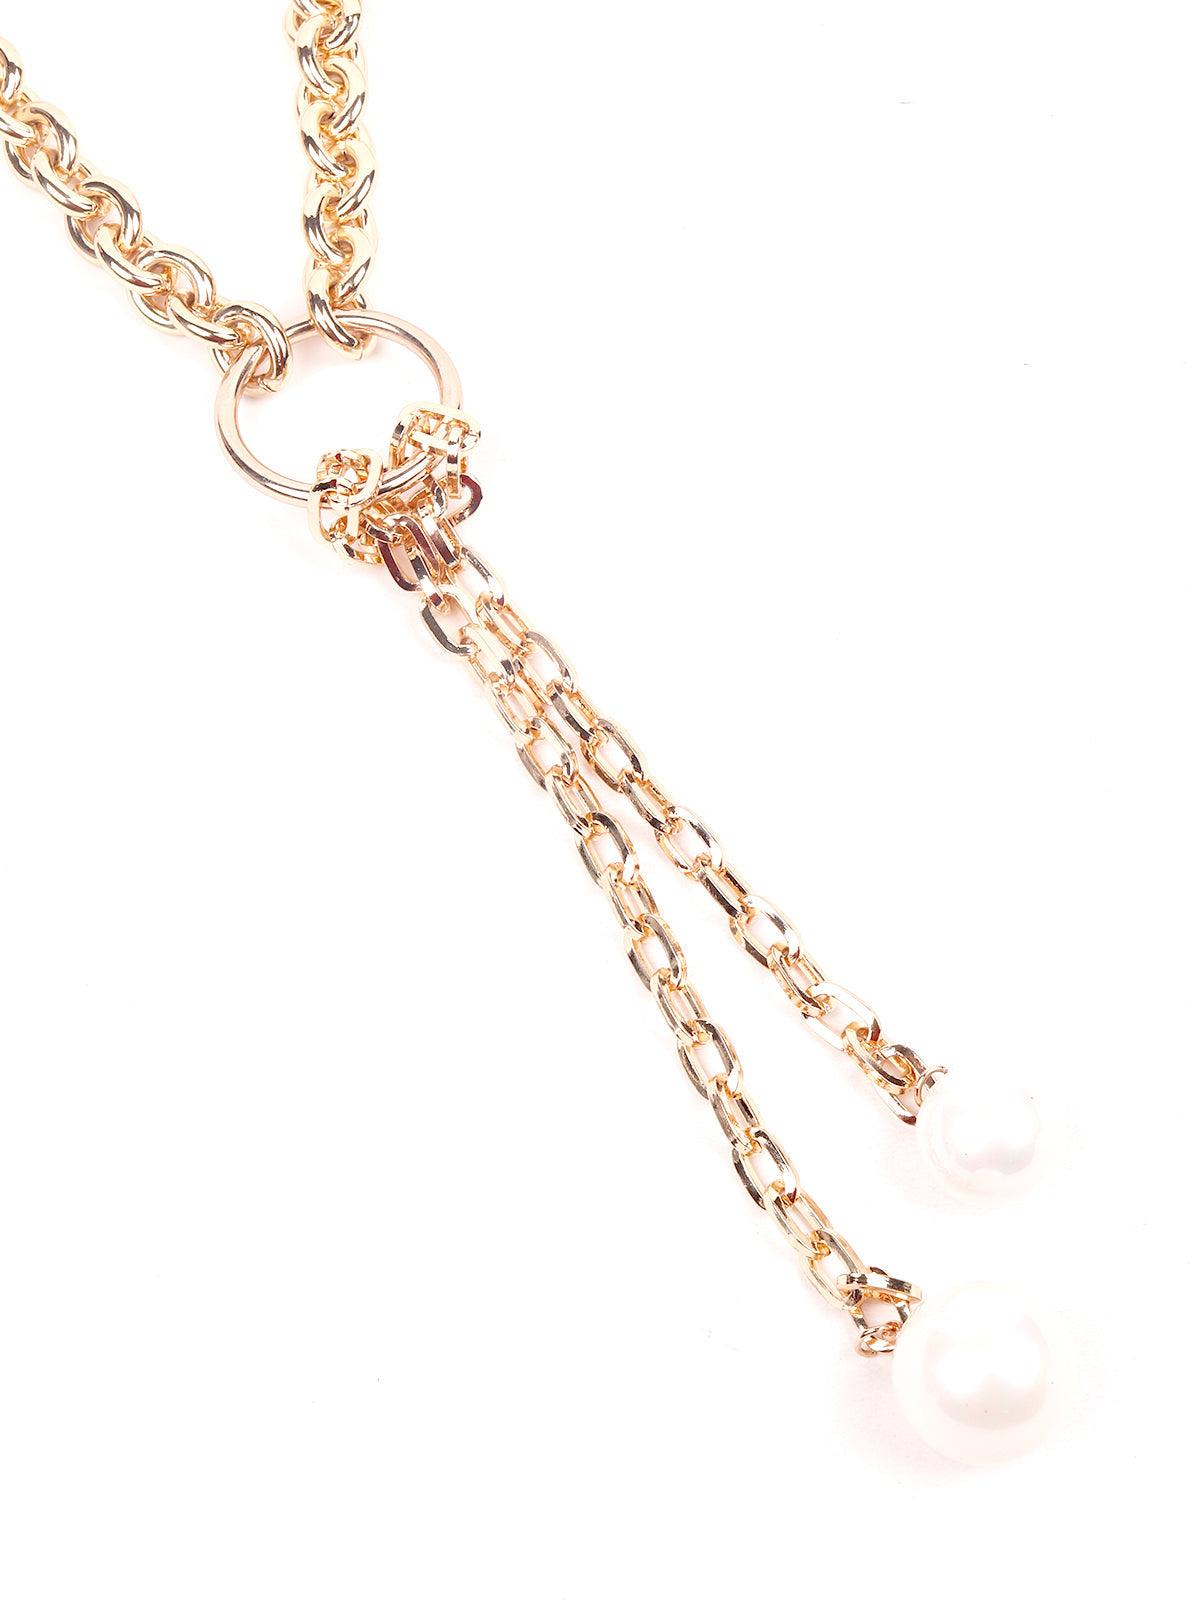 Stunning gold interlinked statement necklace - Odette